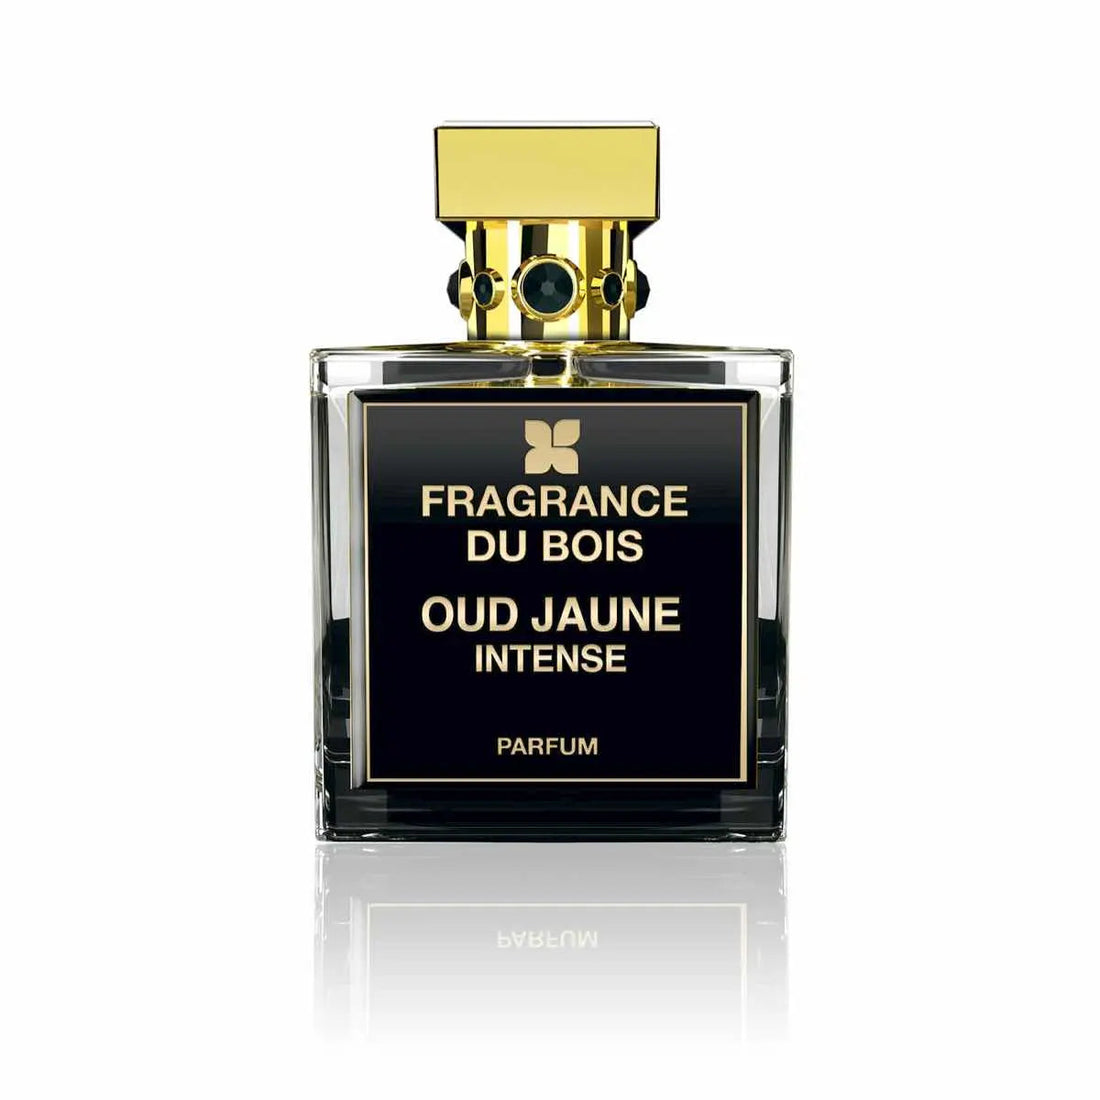 Perfume Fragrance du bois Oud Jaune - 100 ml